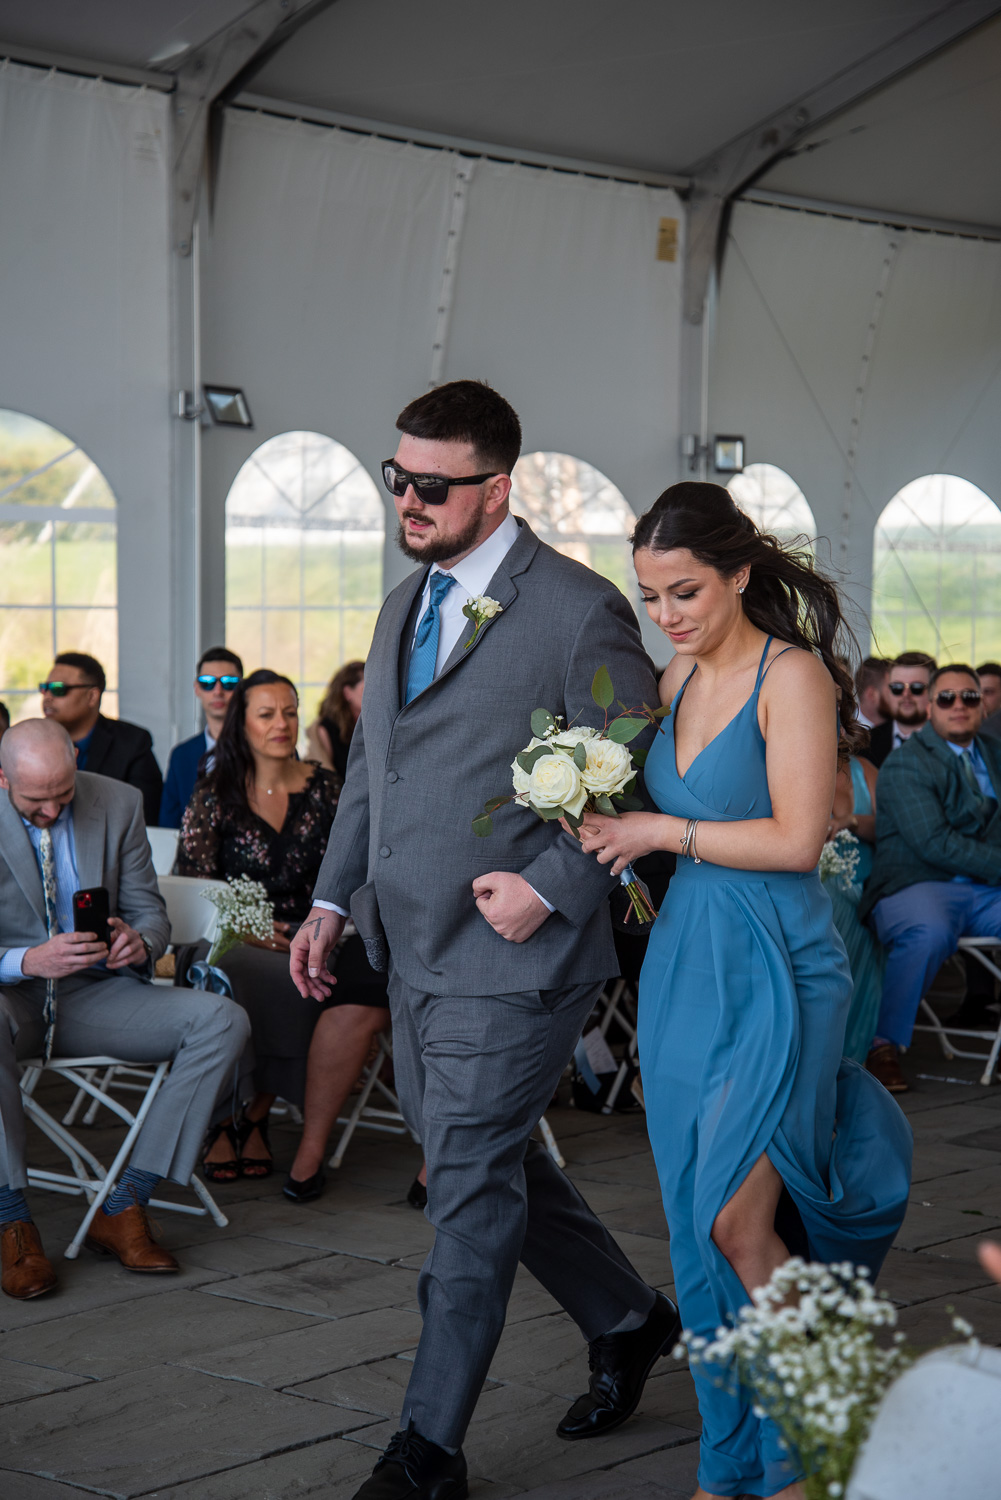 Groomsman walking bridesmaid down the aisle